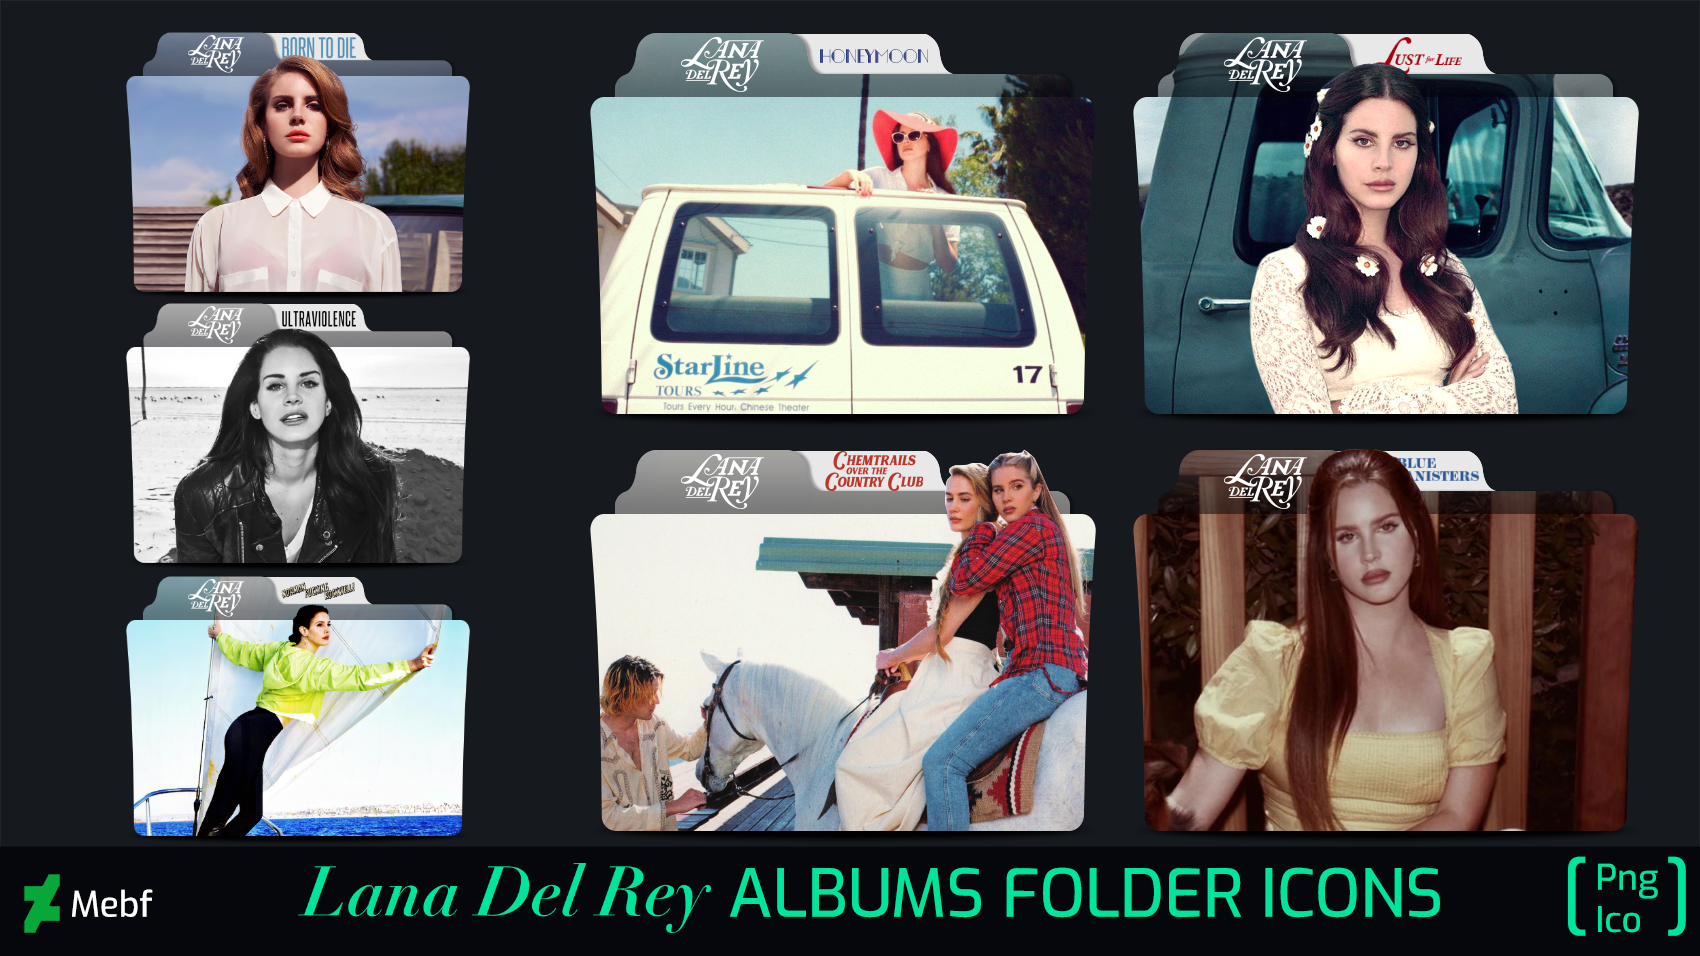 Lana Del Rey Albums Folder Icons Pack by Mebf on DeviantArt